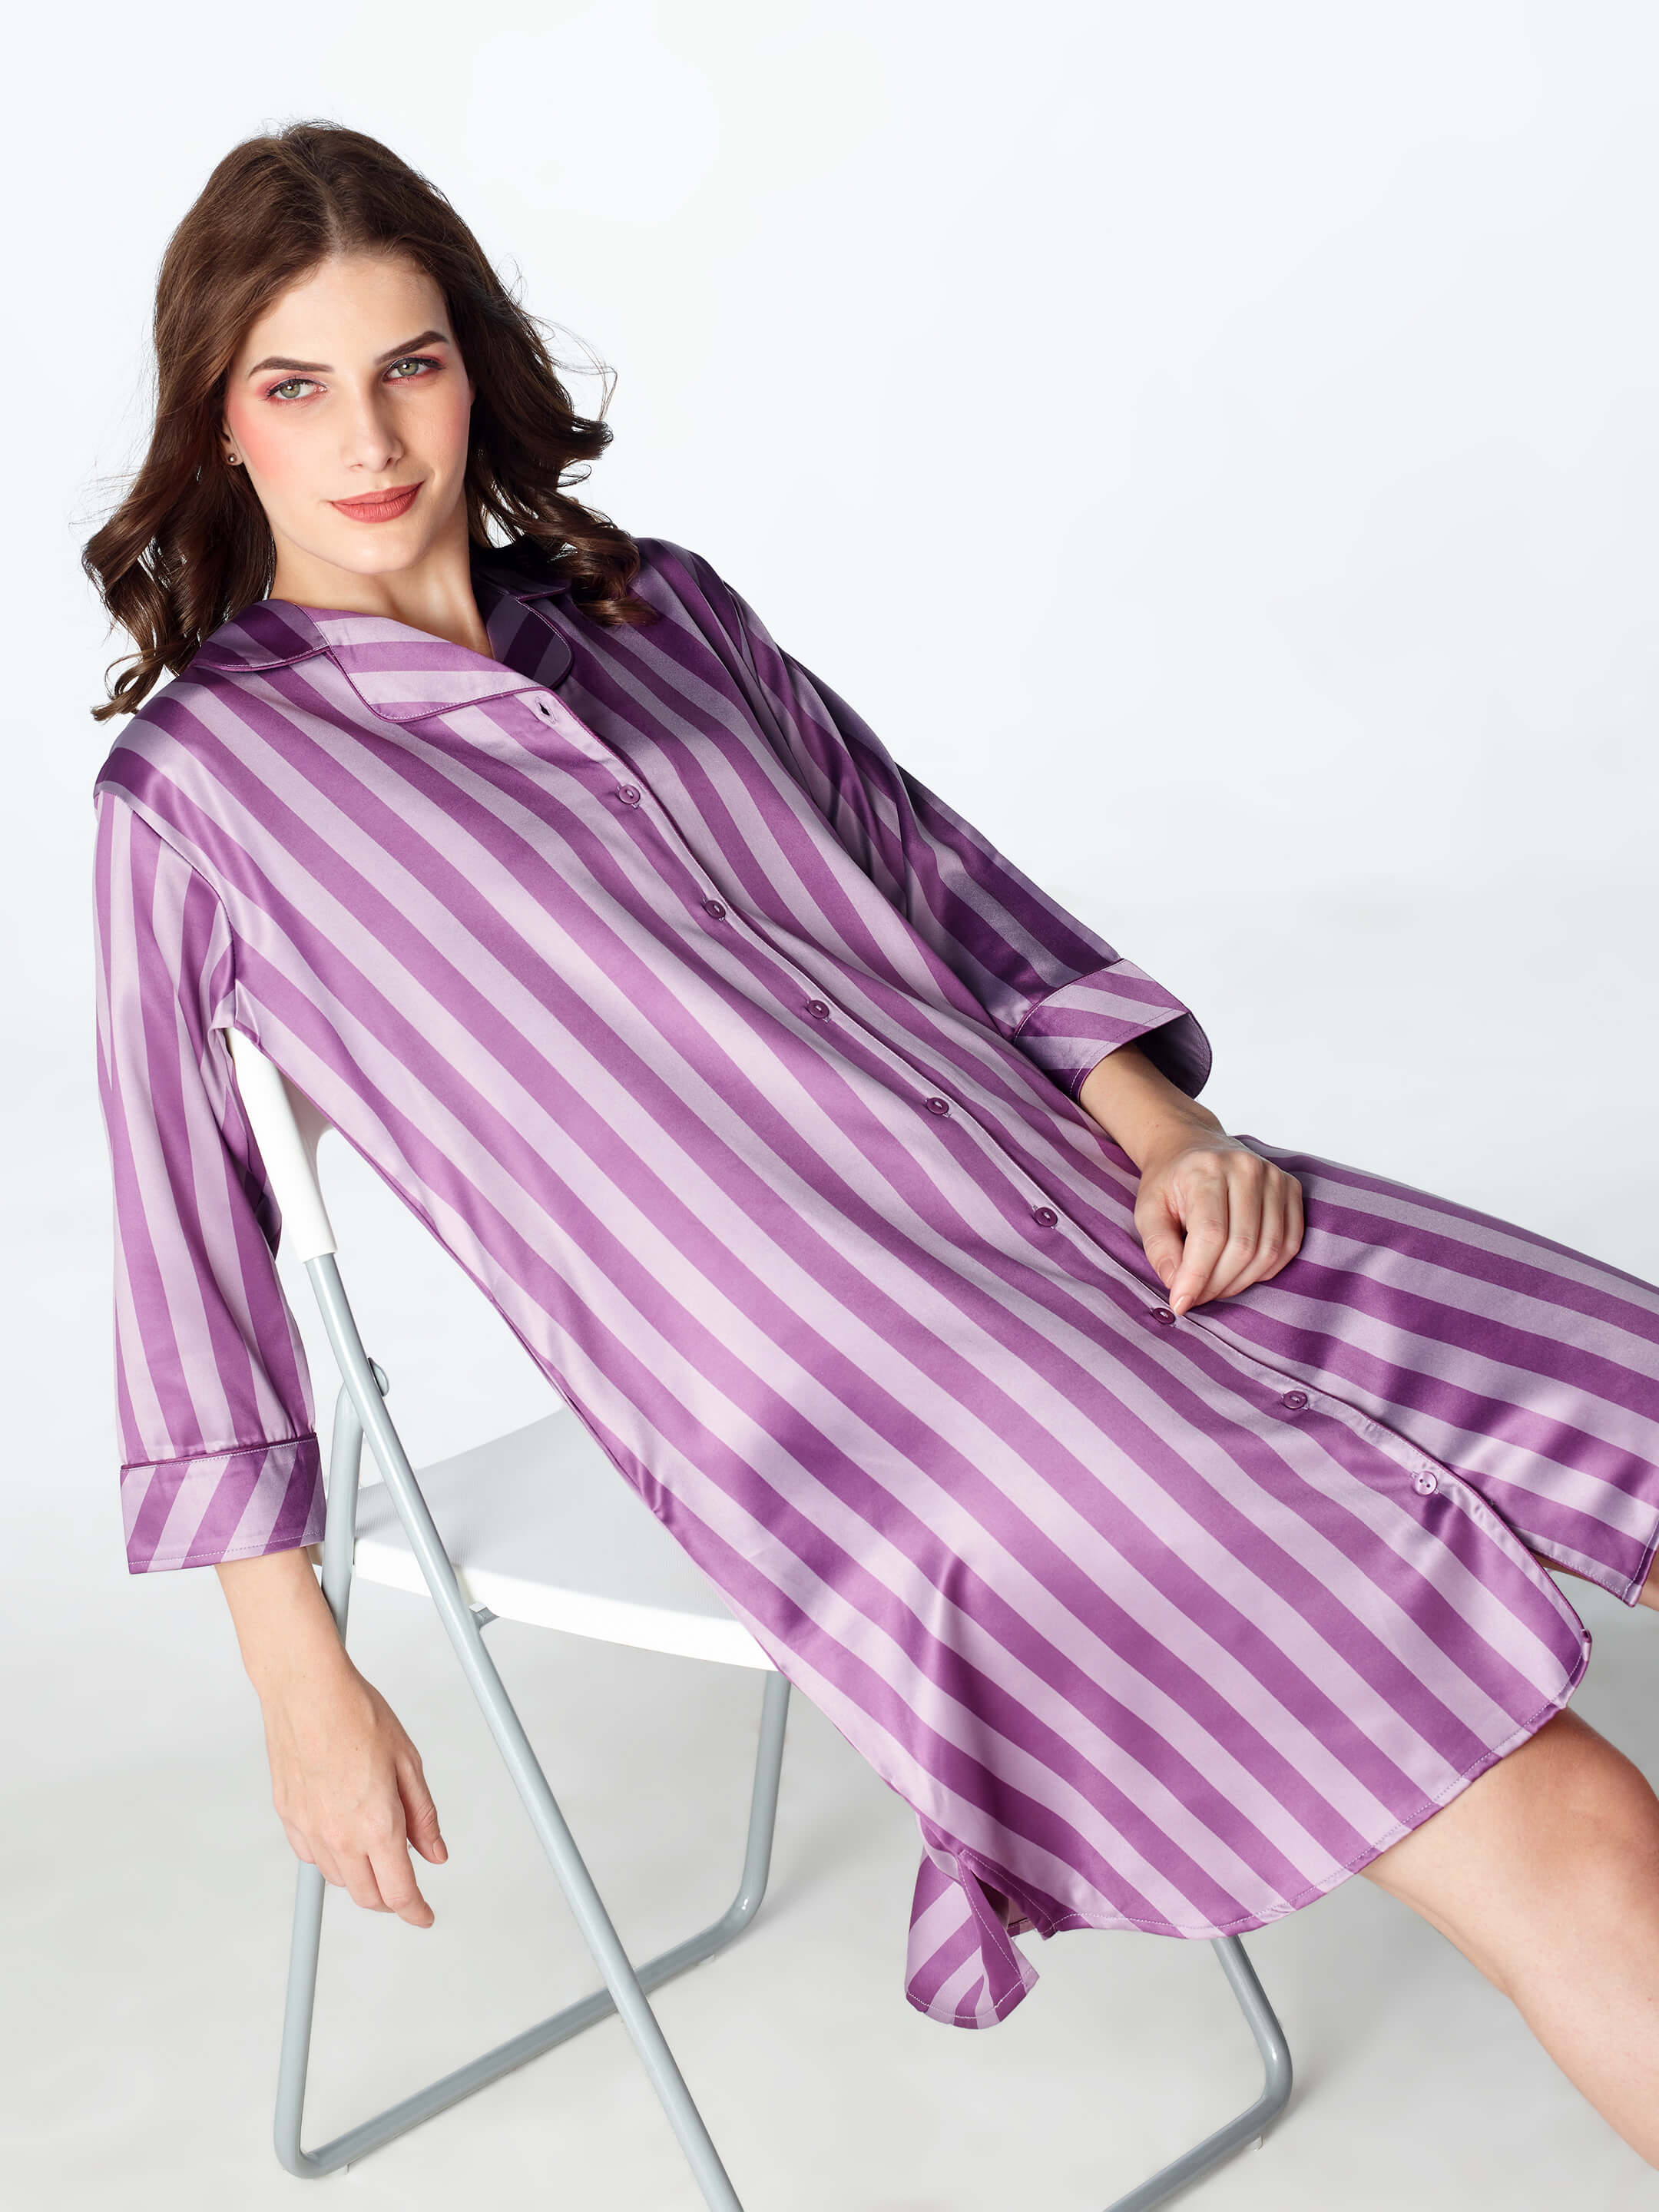 Denim Full Sleeve Long Dress with Embroidery - 8 – Trendyfashionbysn